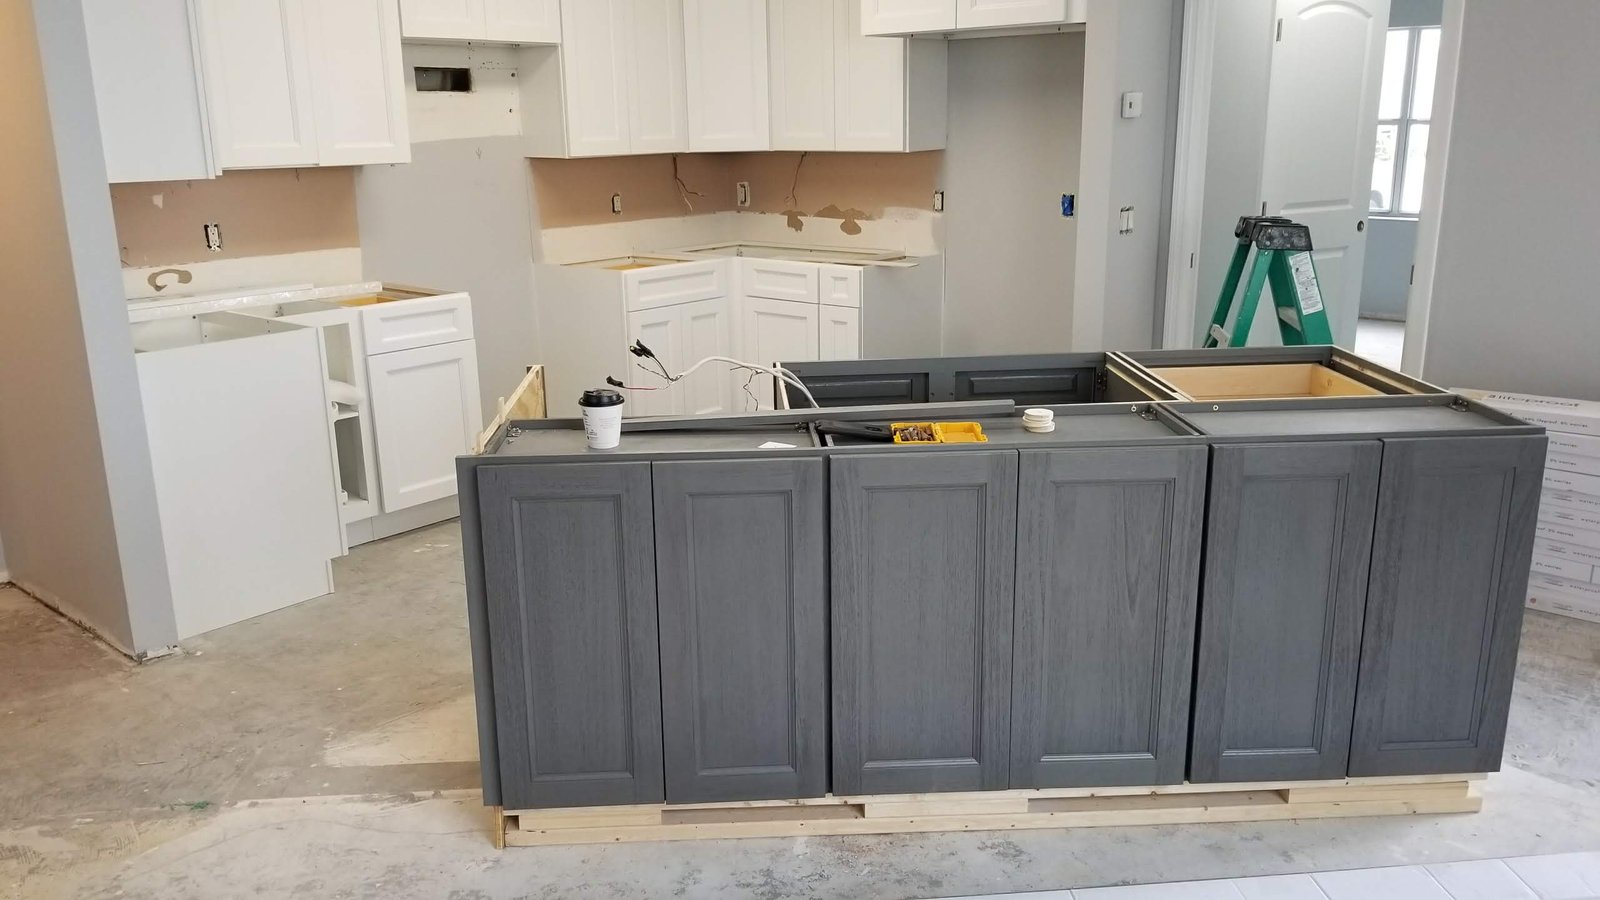 new kitchen cabinets being installed